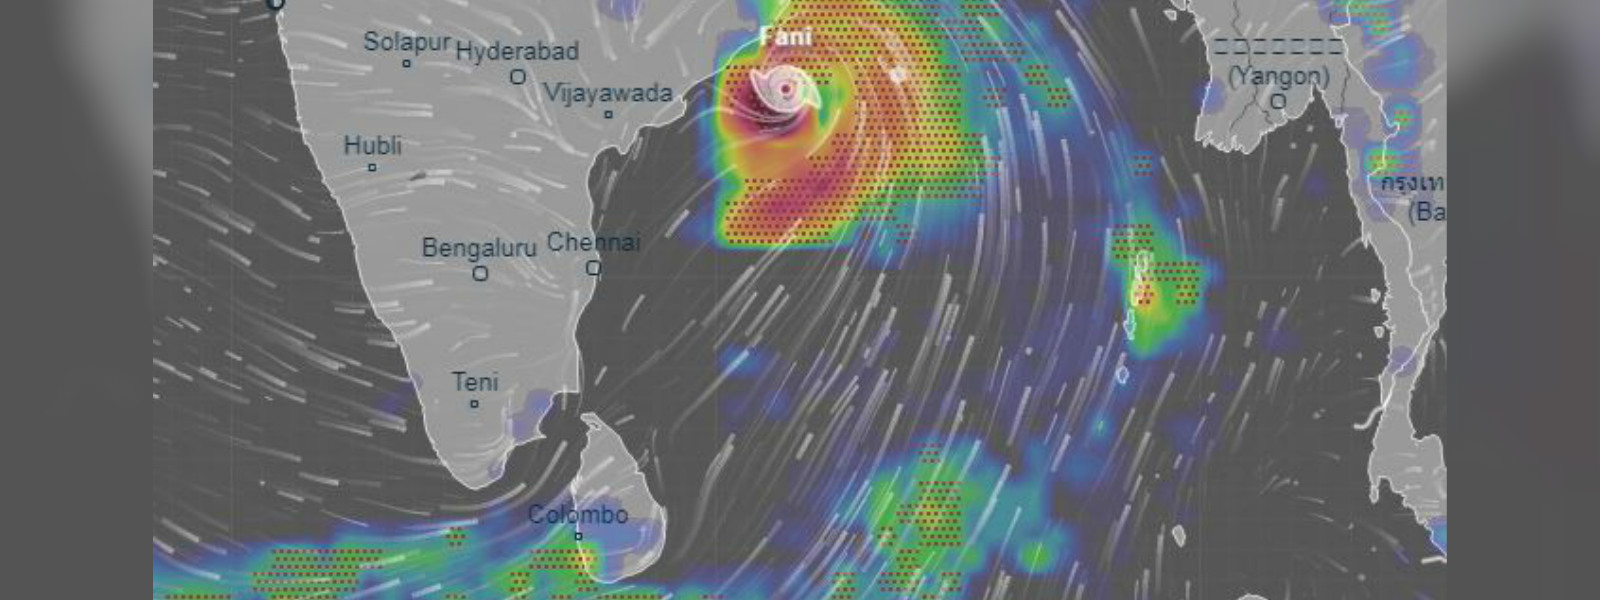 Cyclone FANI located 880 km north-east of Jaffna